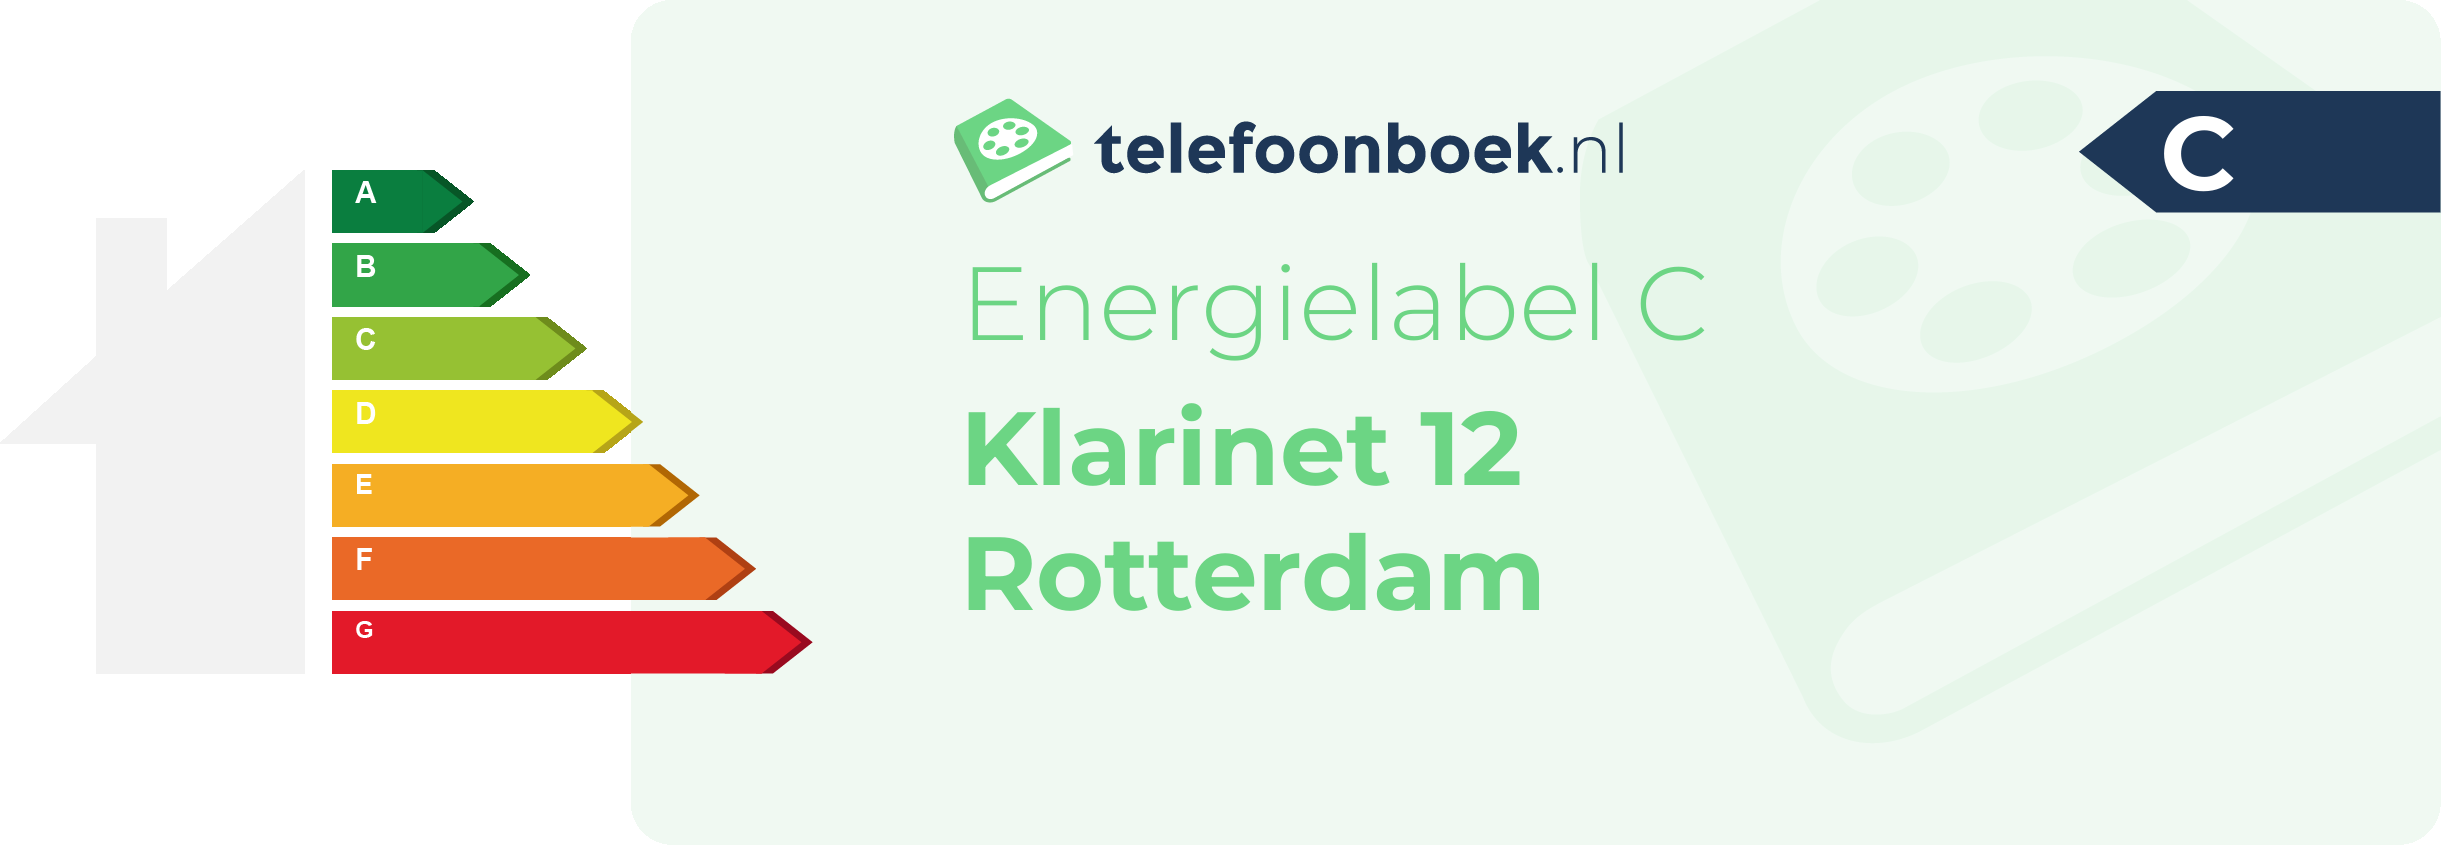 Energielabel Klarinet 12 Rotterdam